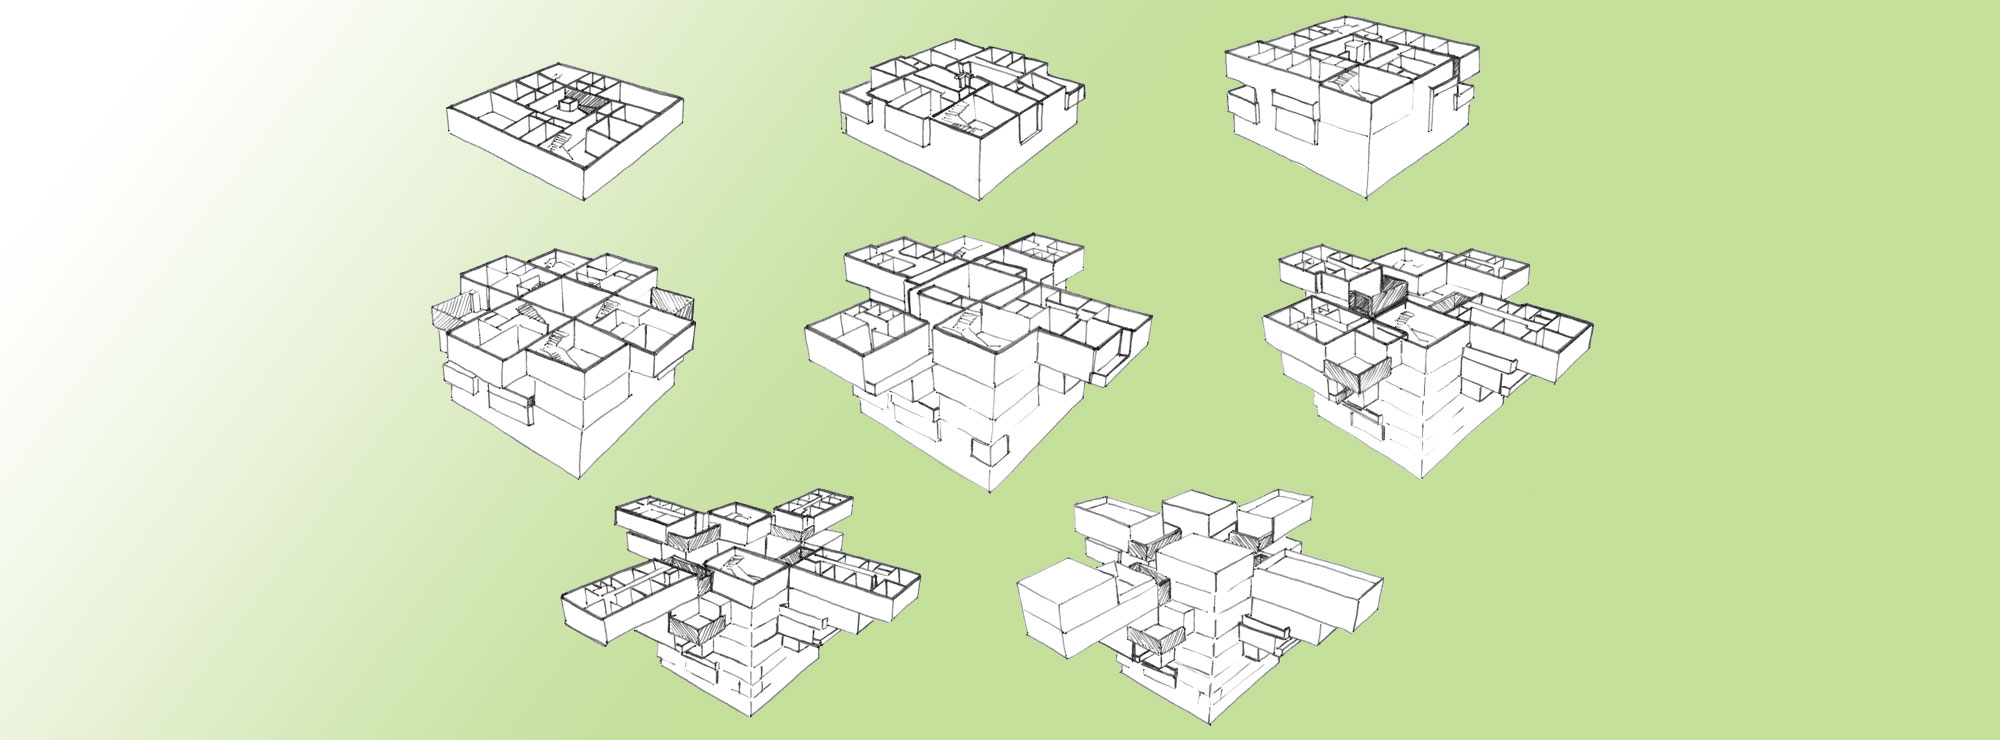 Marwa Al-Sabouni Tree Unit mass housing project schematic